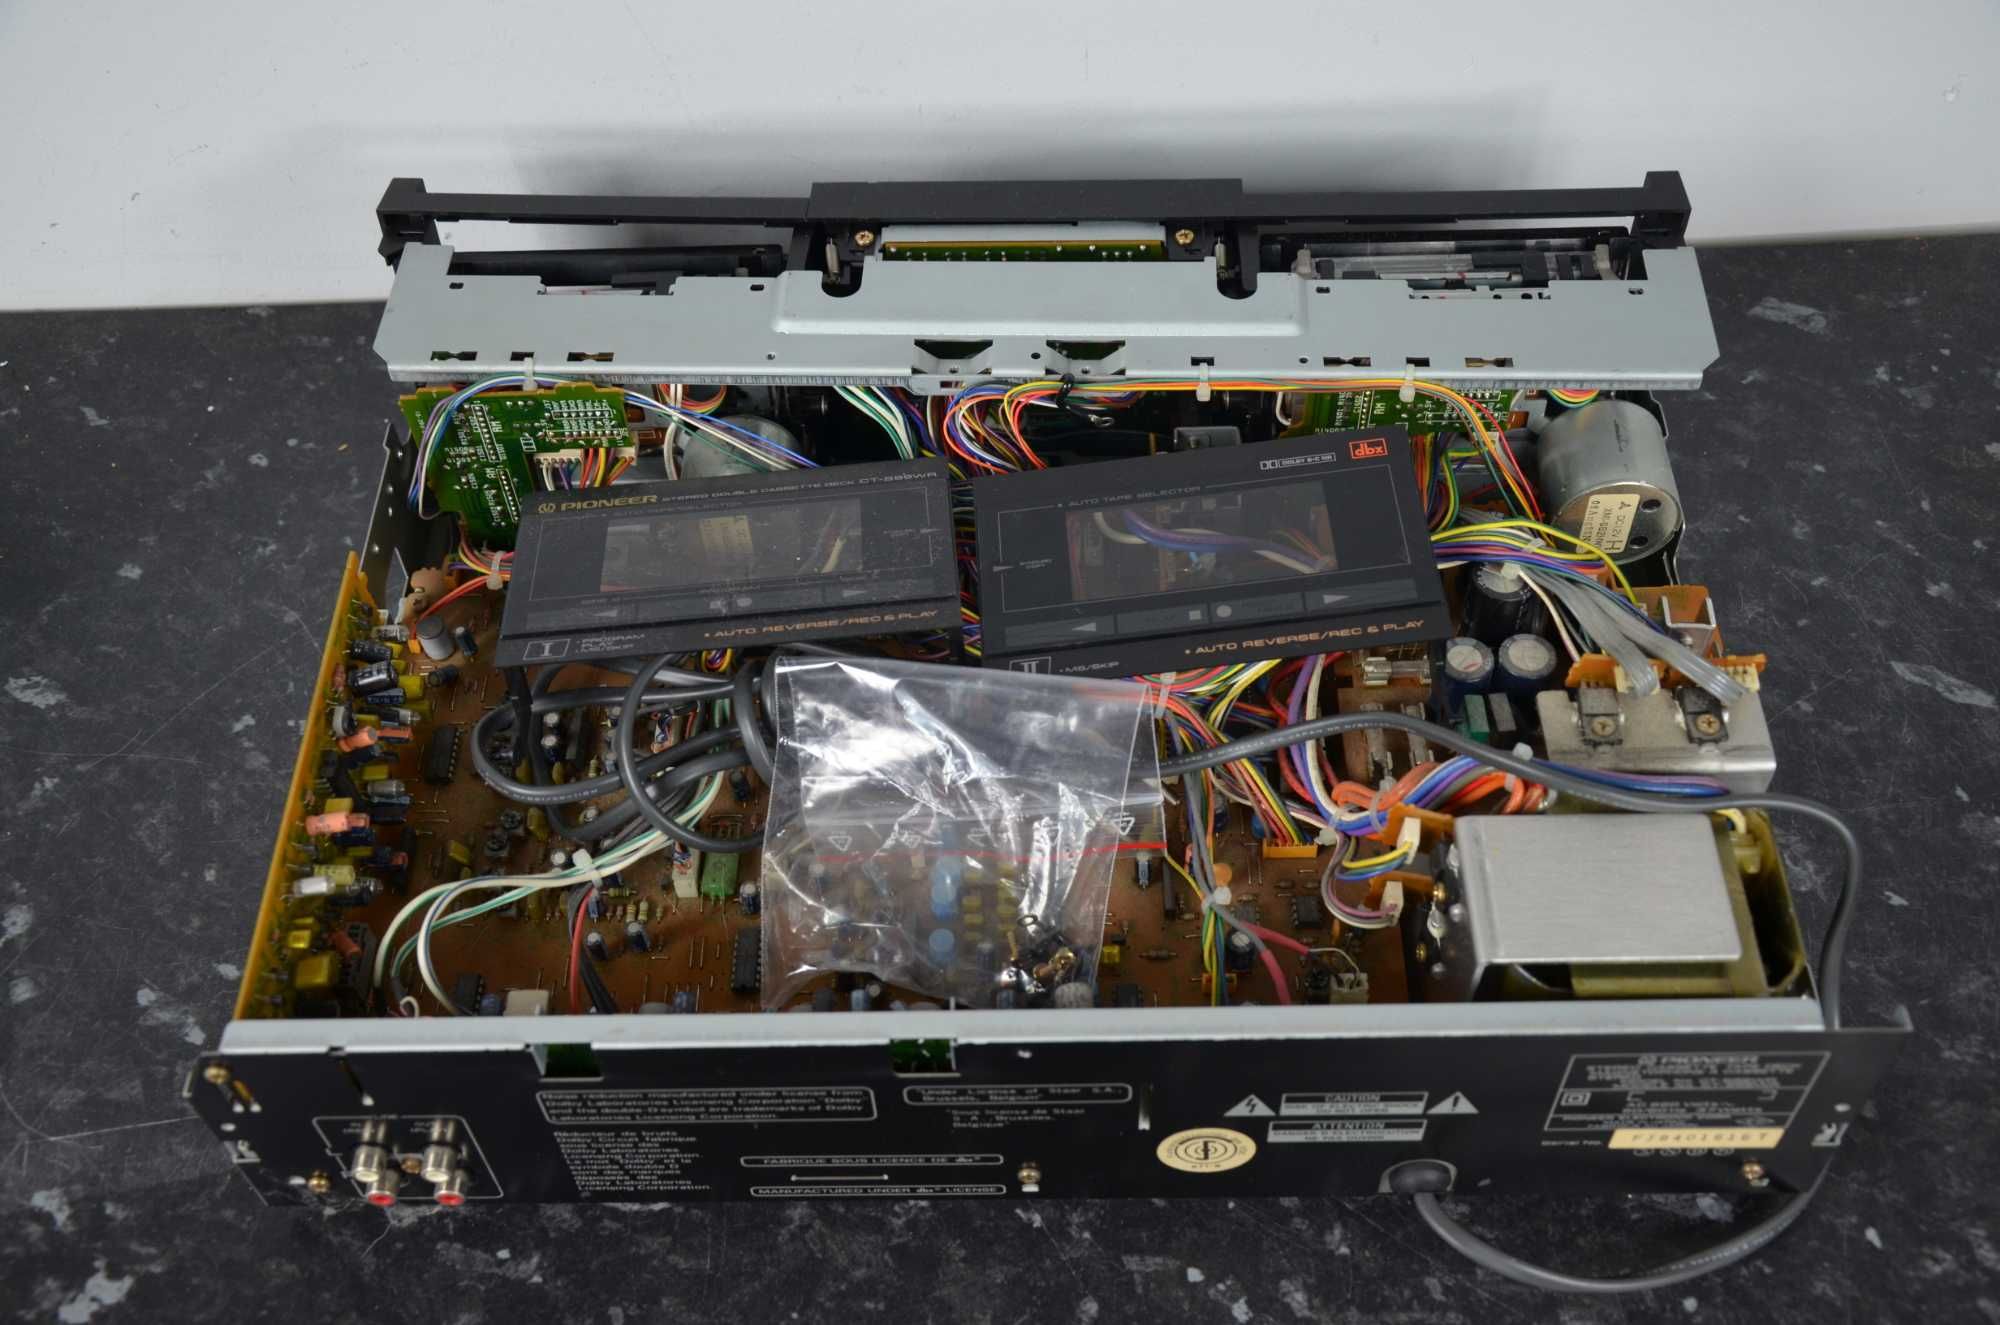 Magnetofon kasetowy Pioneer CT-S99WR